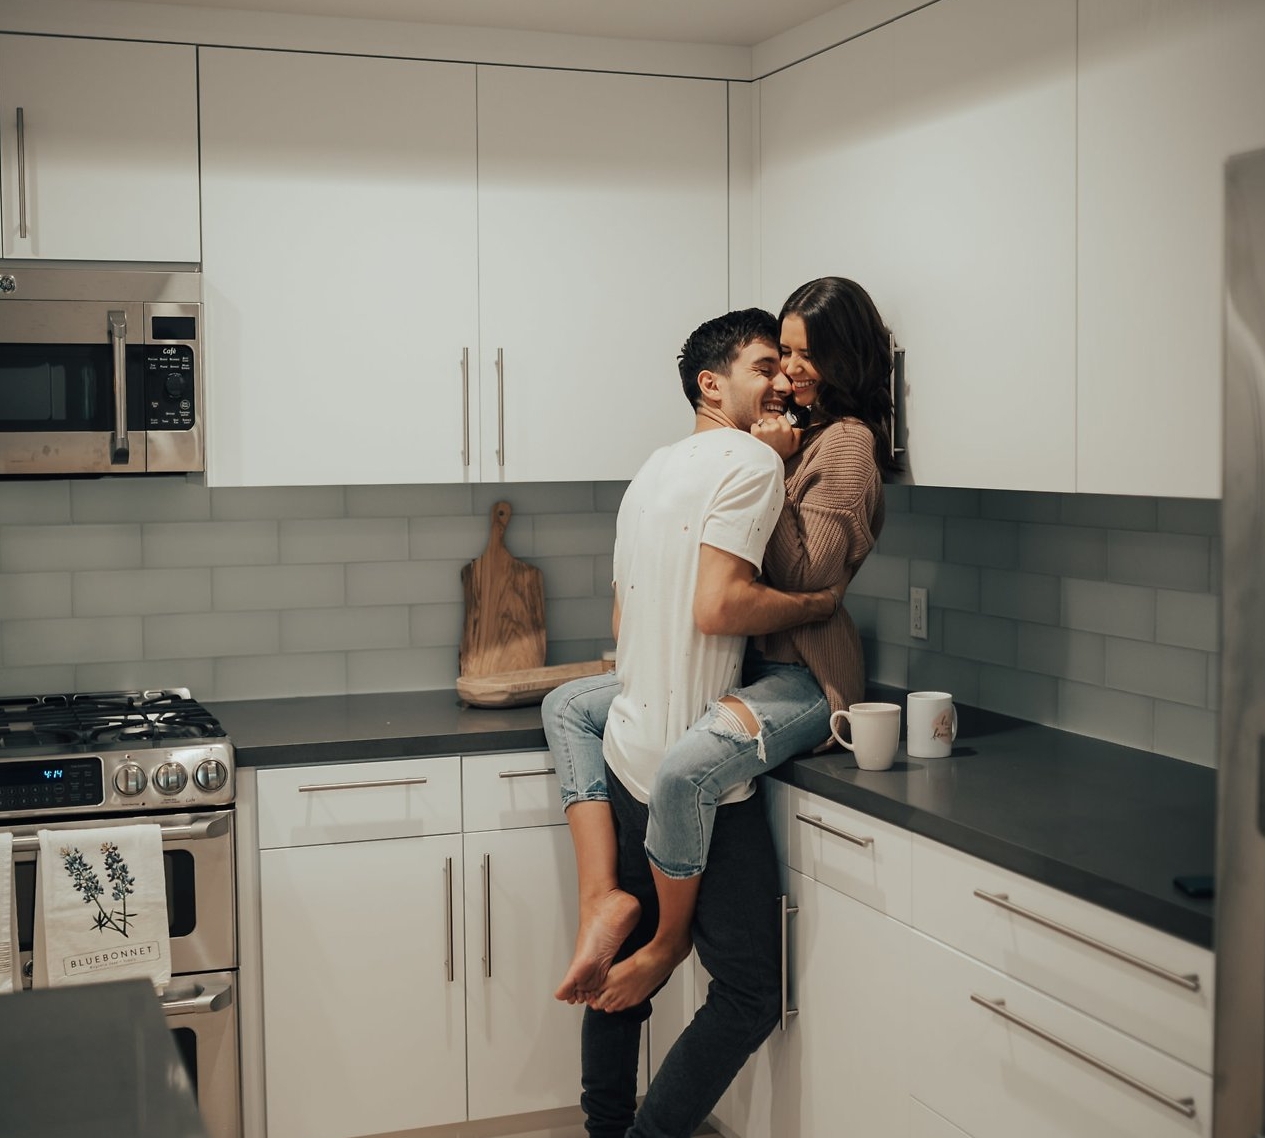 Фото на кухне парень с девушкой